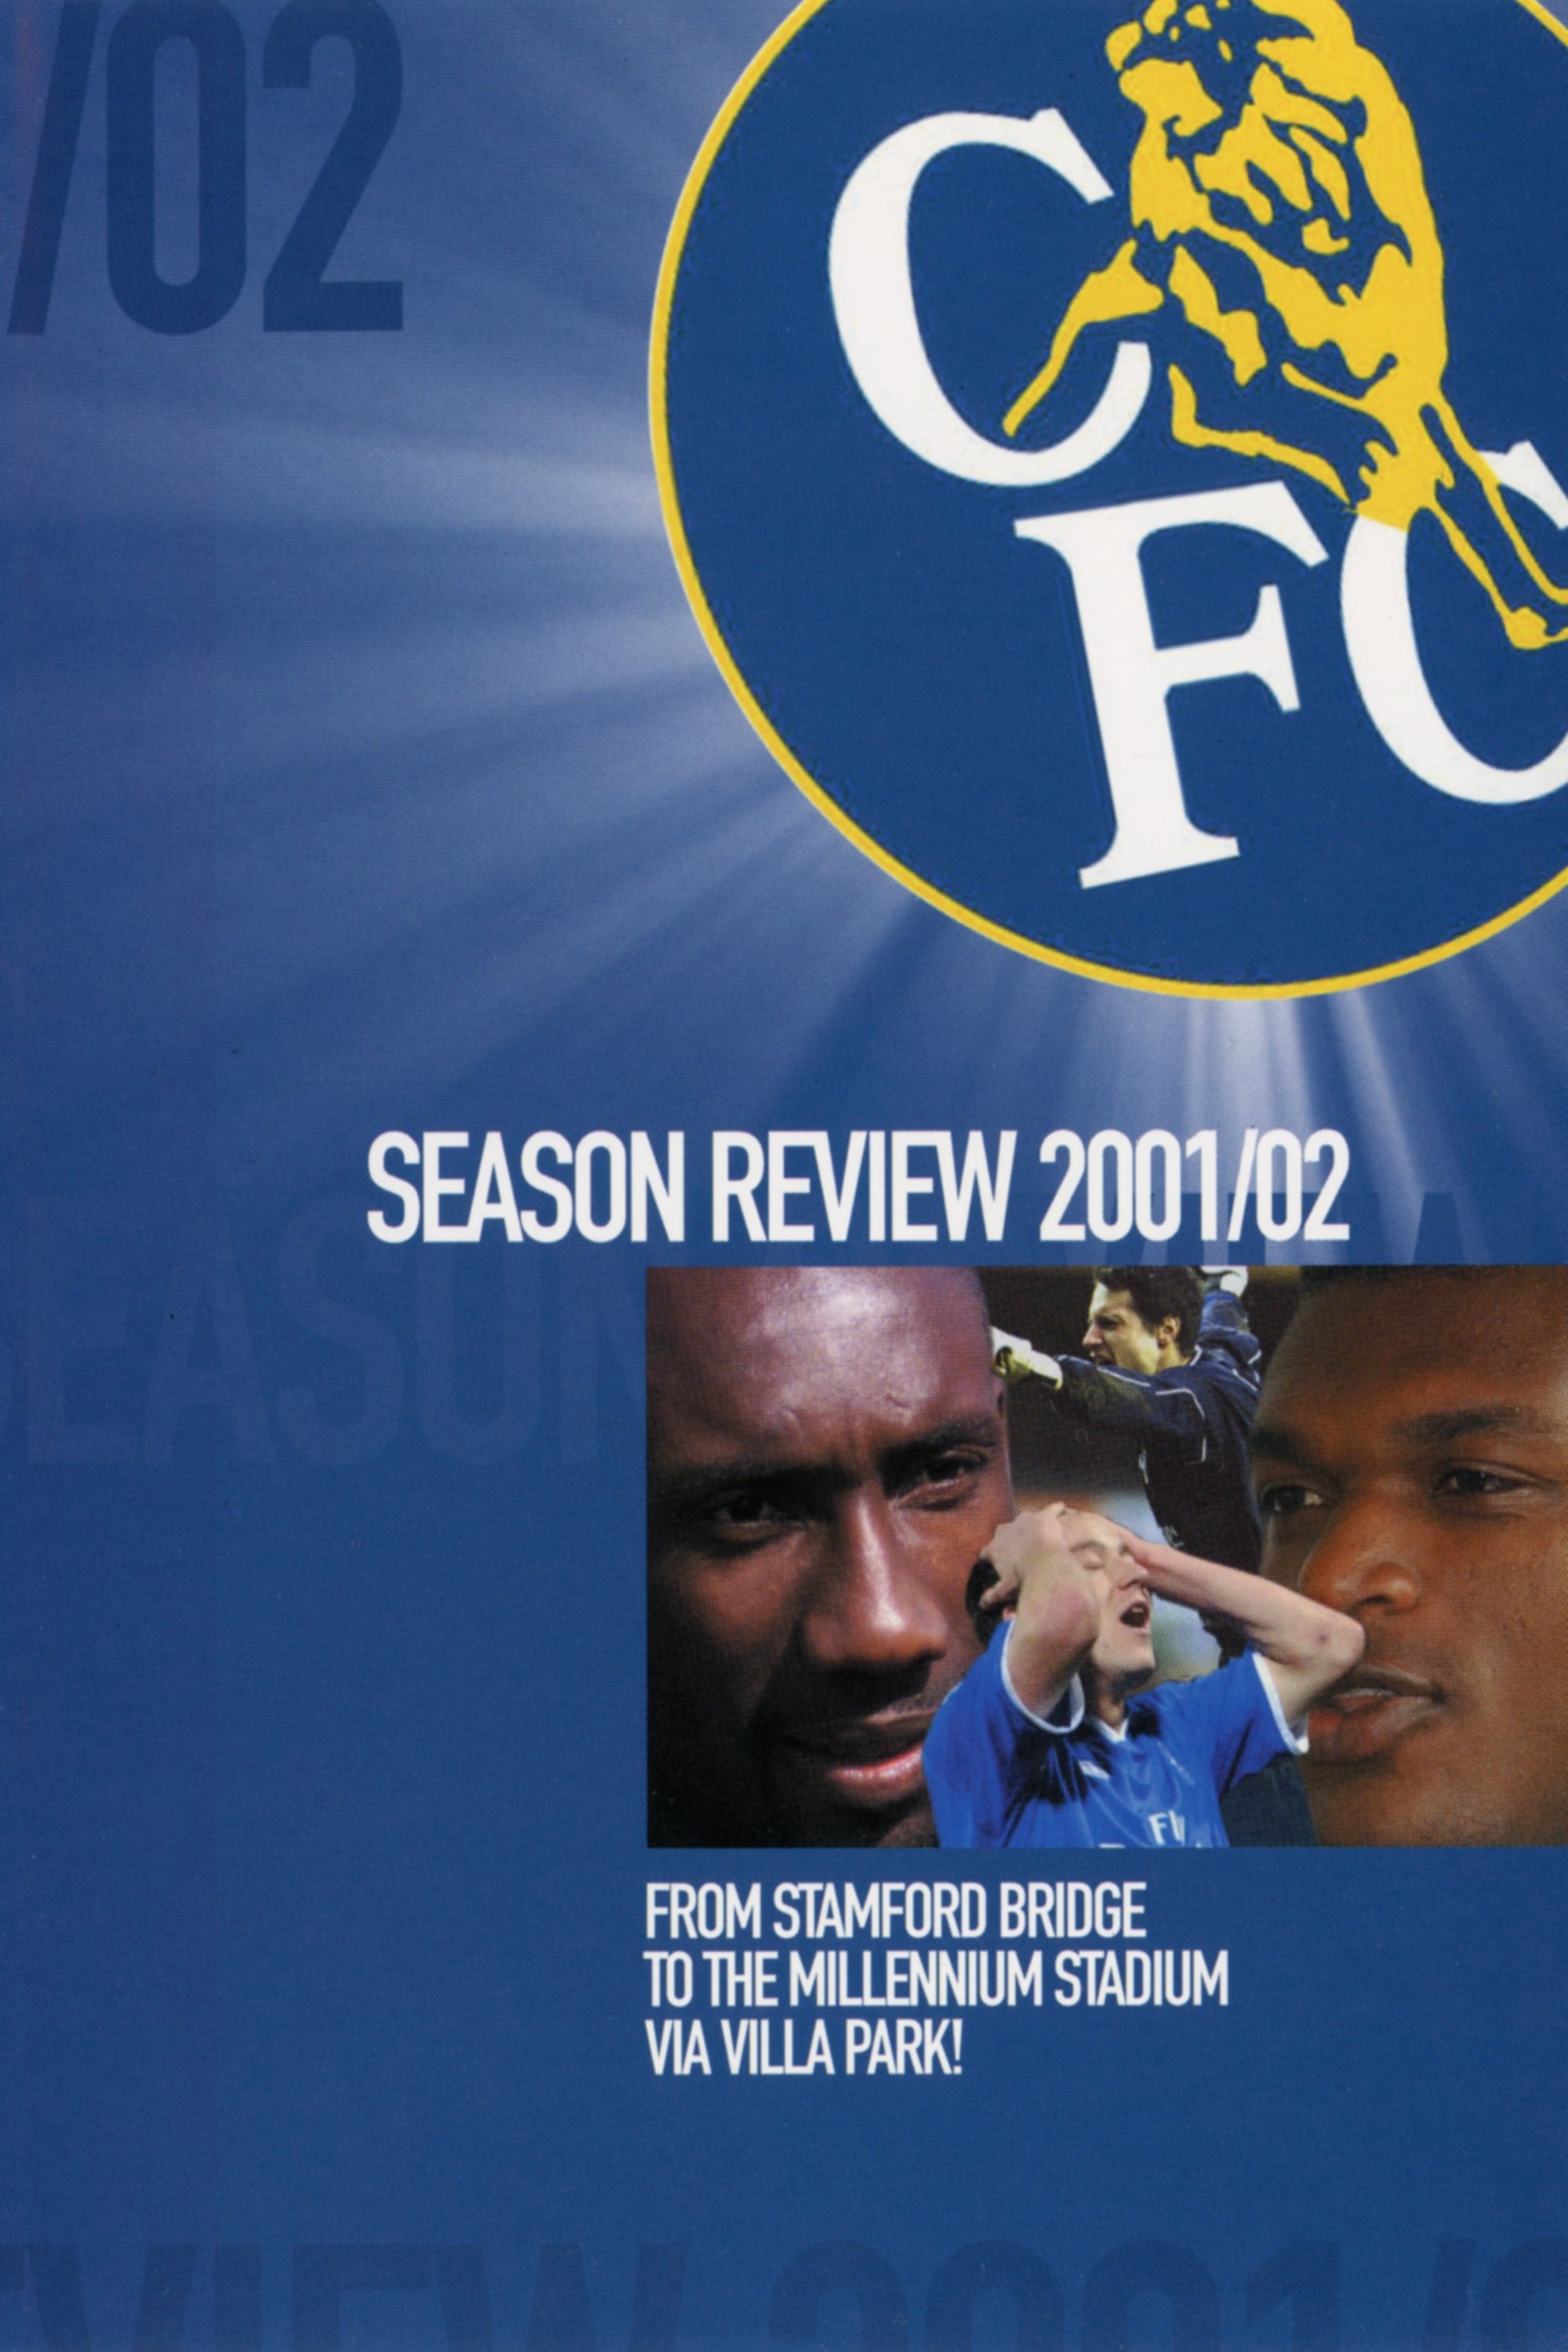 Chelsea FC - Season Review 2001/02